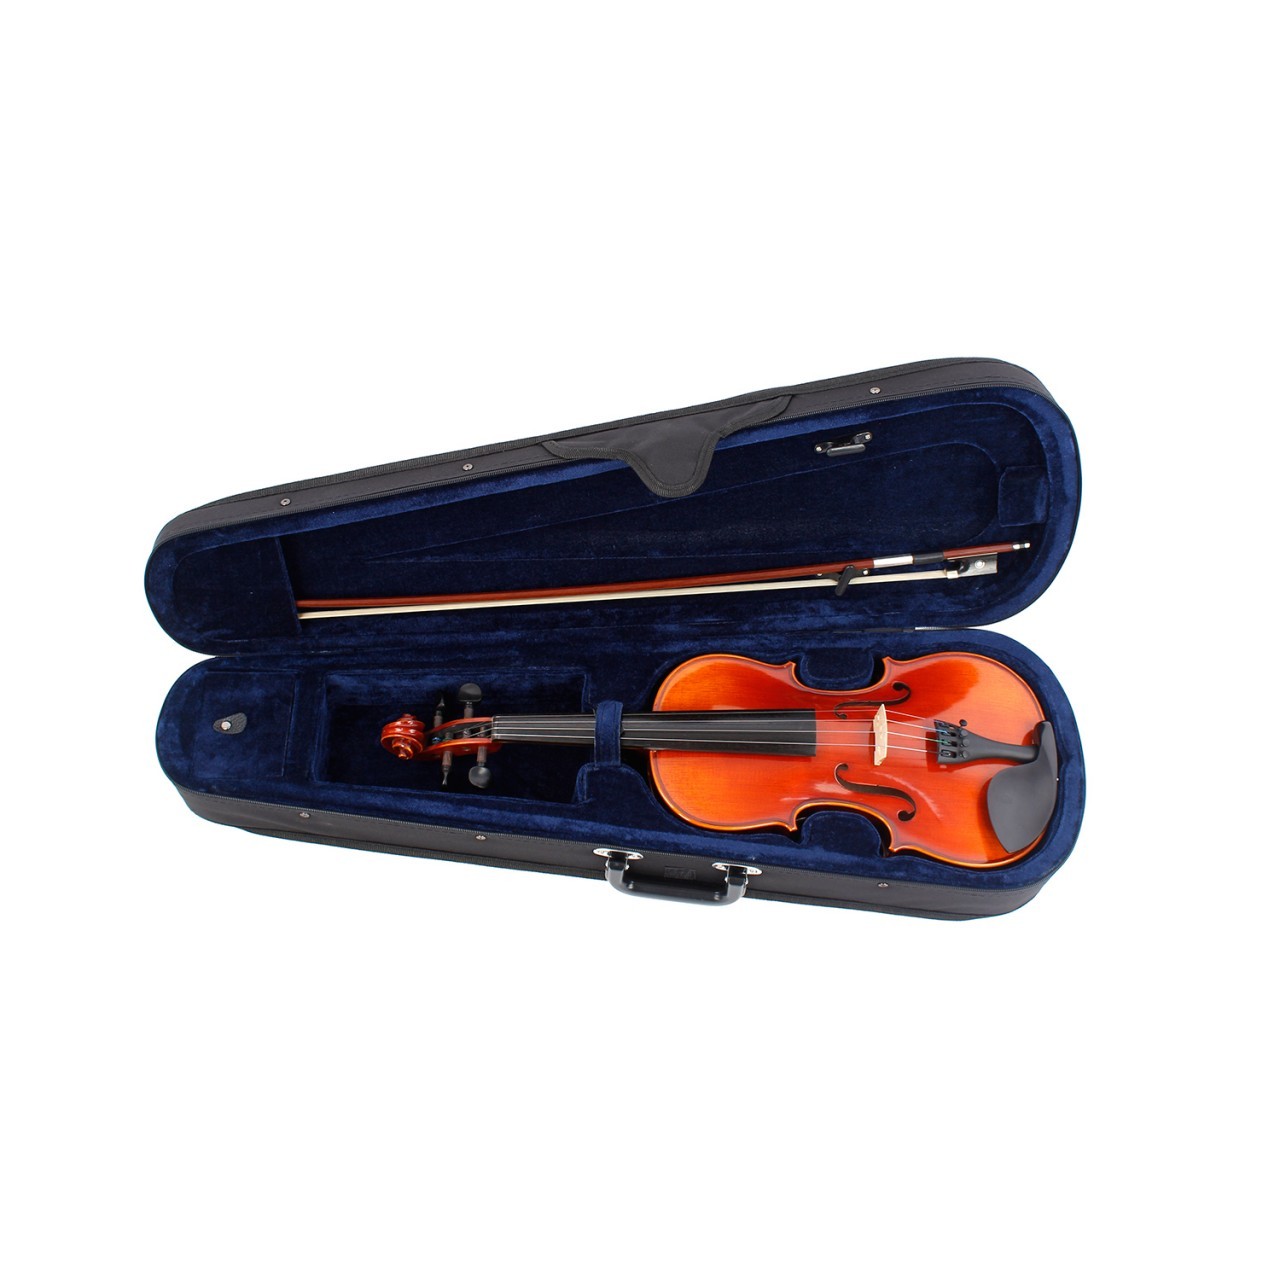 Höfner Violingarnitur AS-180 1/4